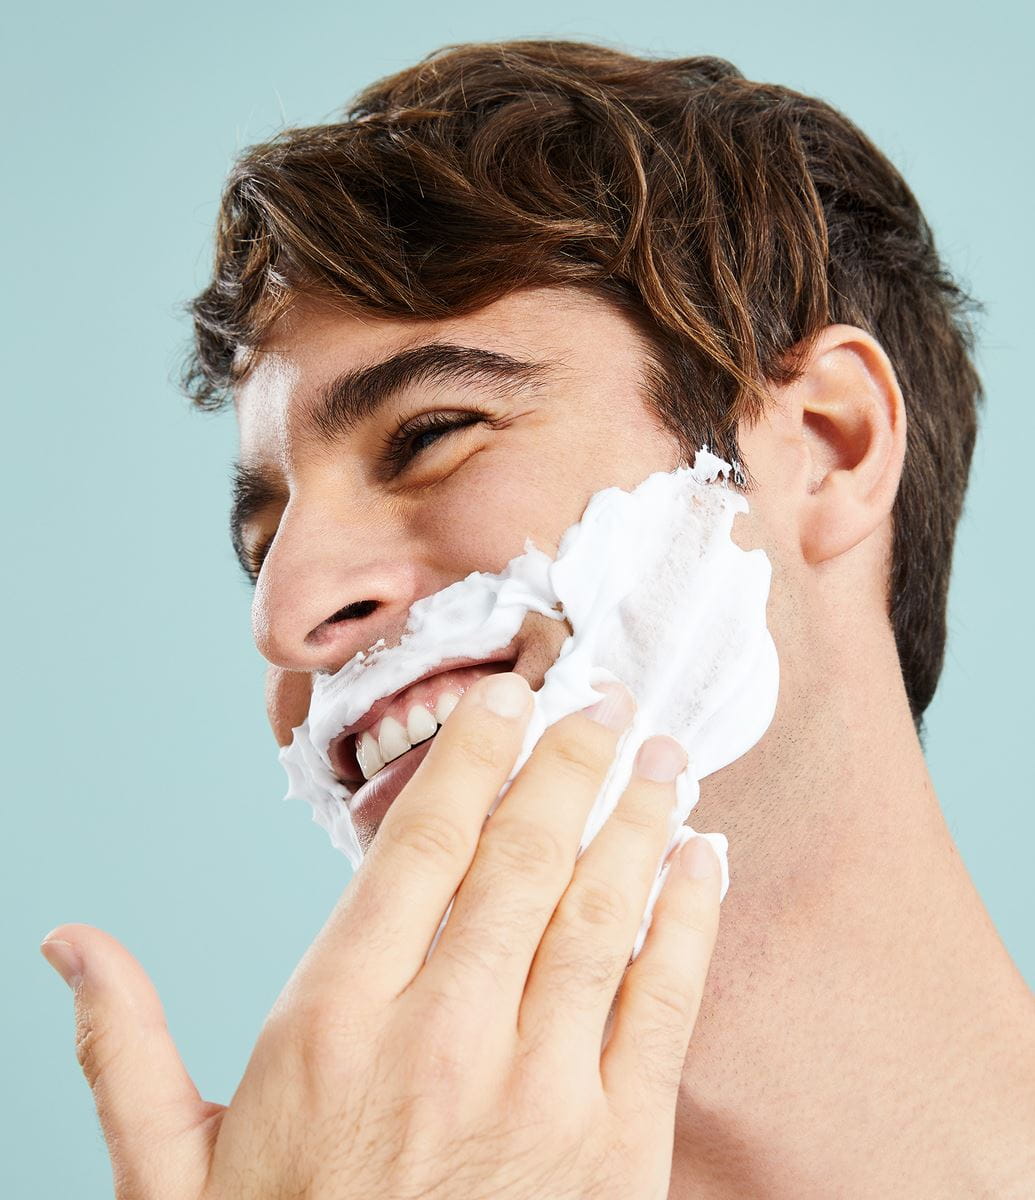 young man applying Nivea shaving cream